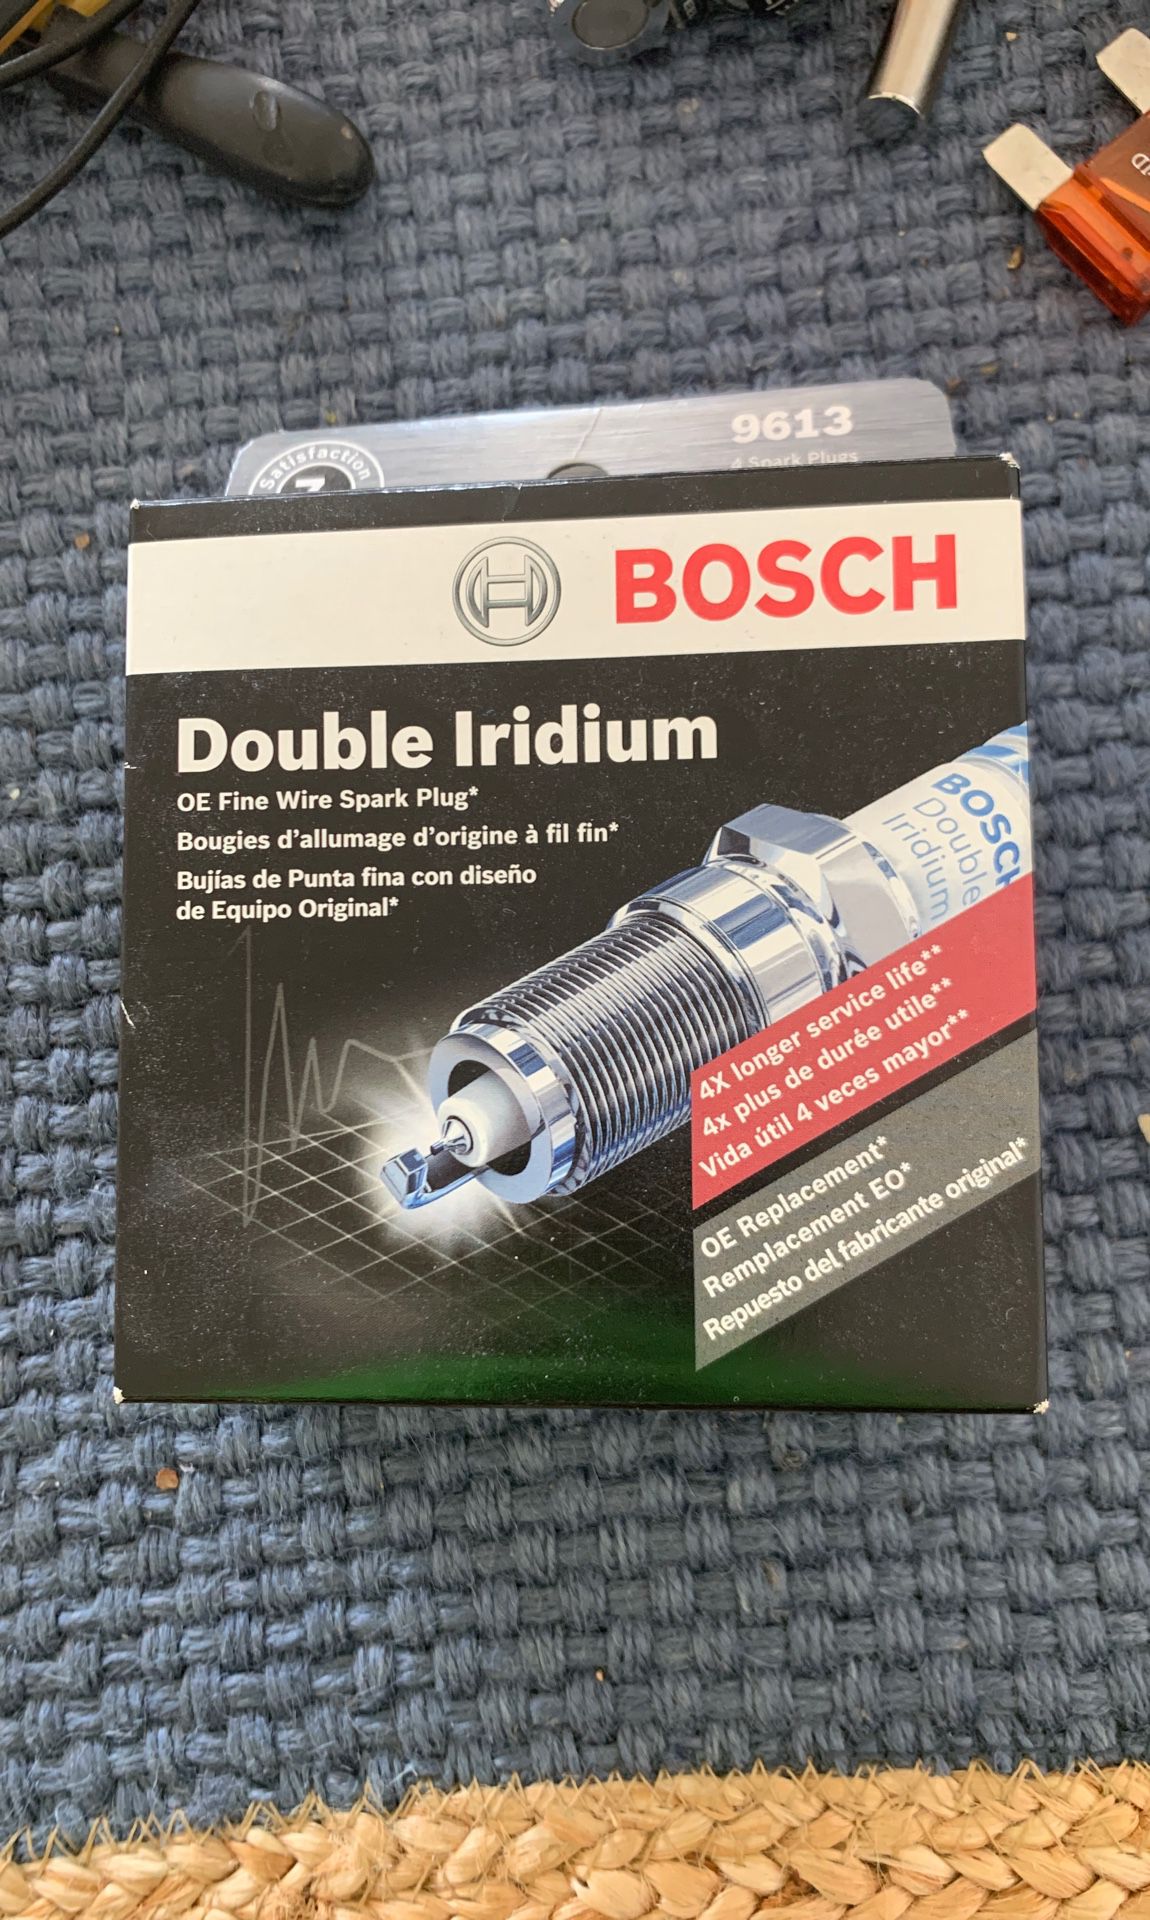 Bosch Double Iridium plugs part # 9613